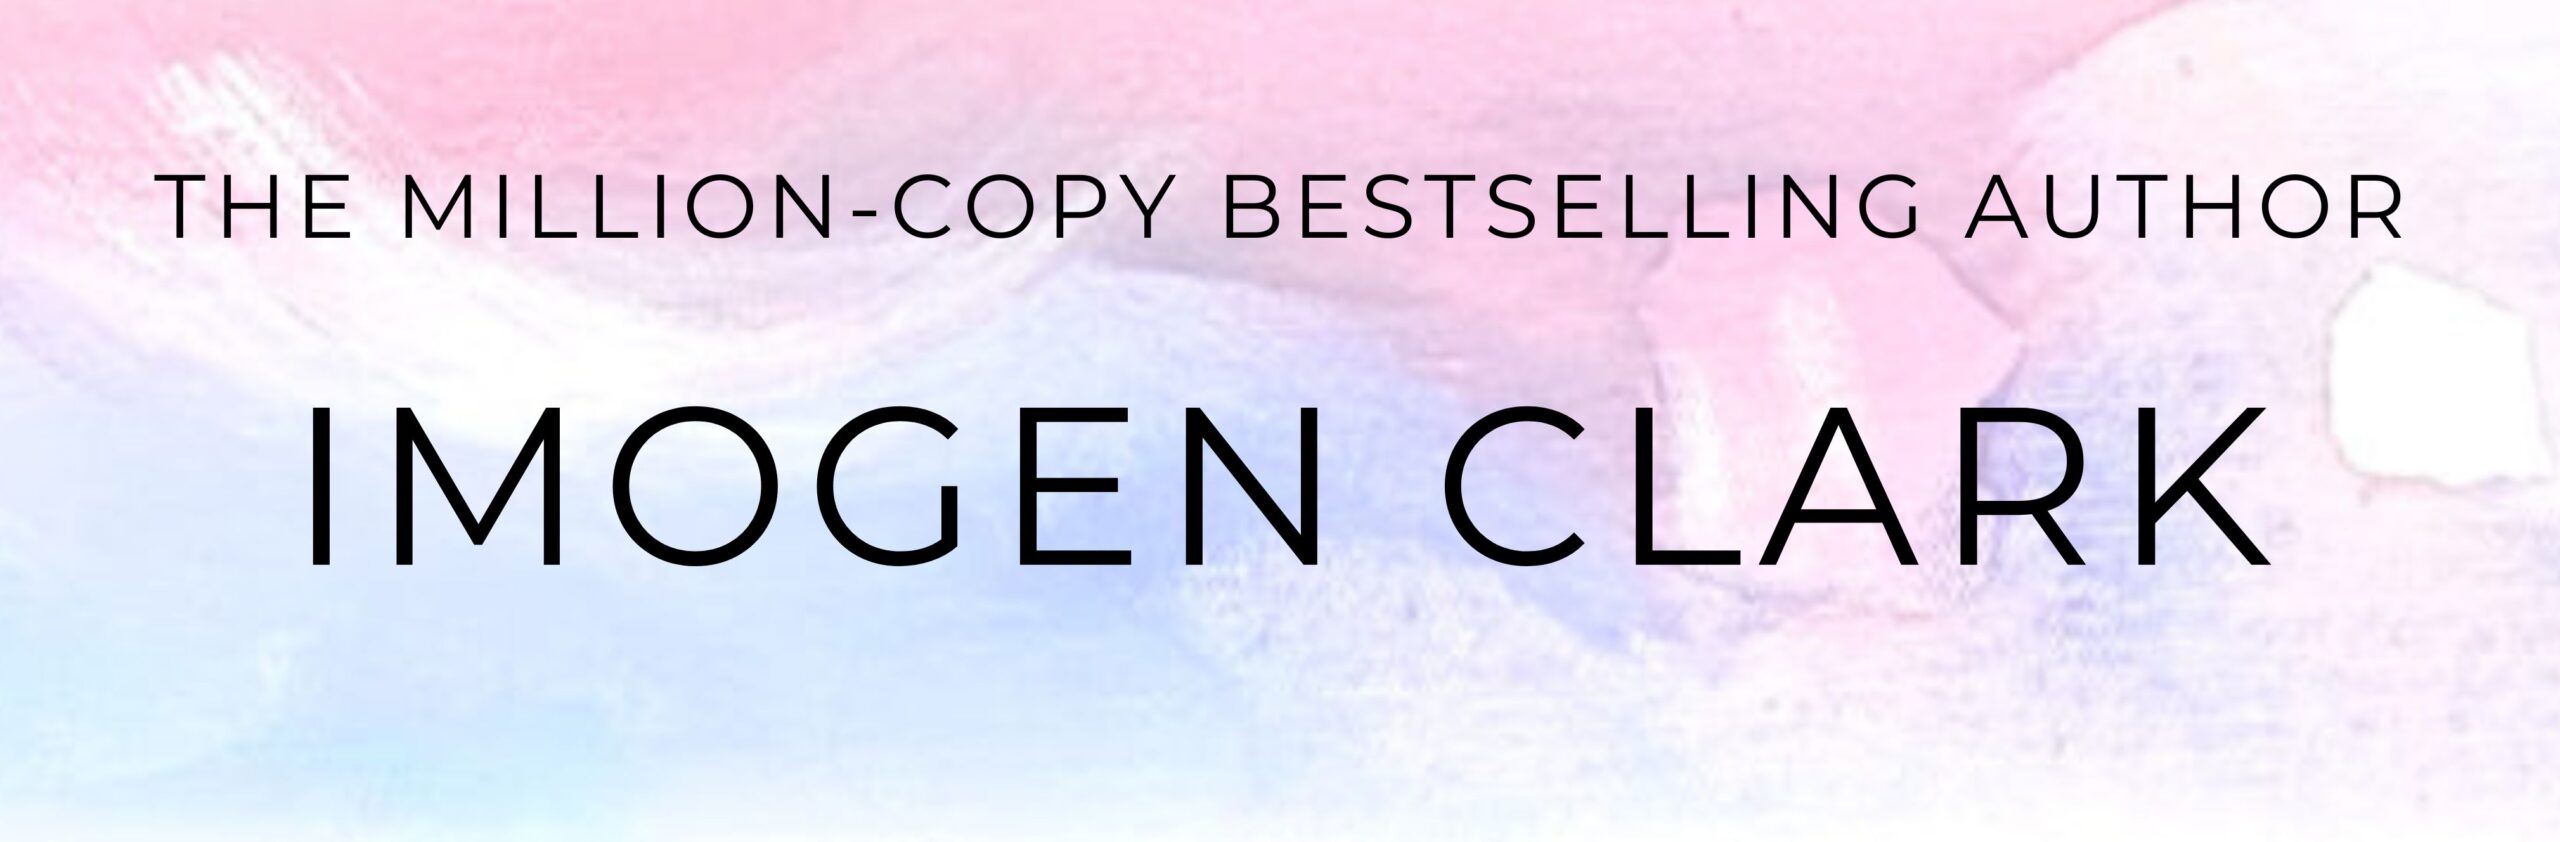 The slider says The Million-Copy Bestselling Author Imogen Clark